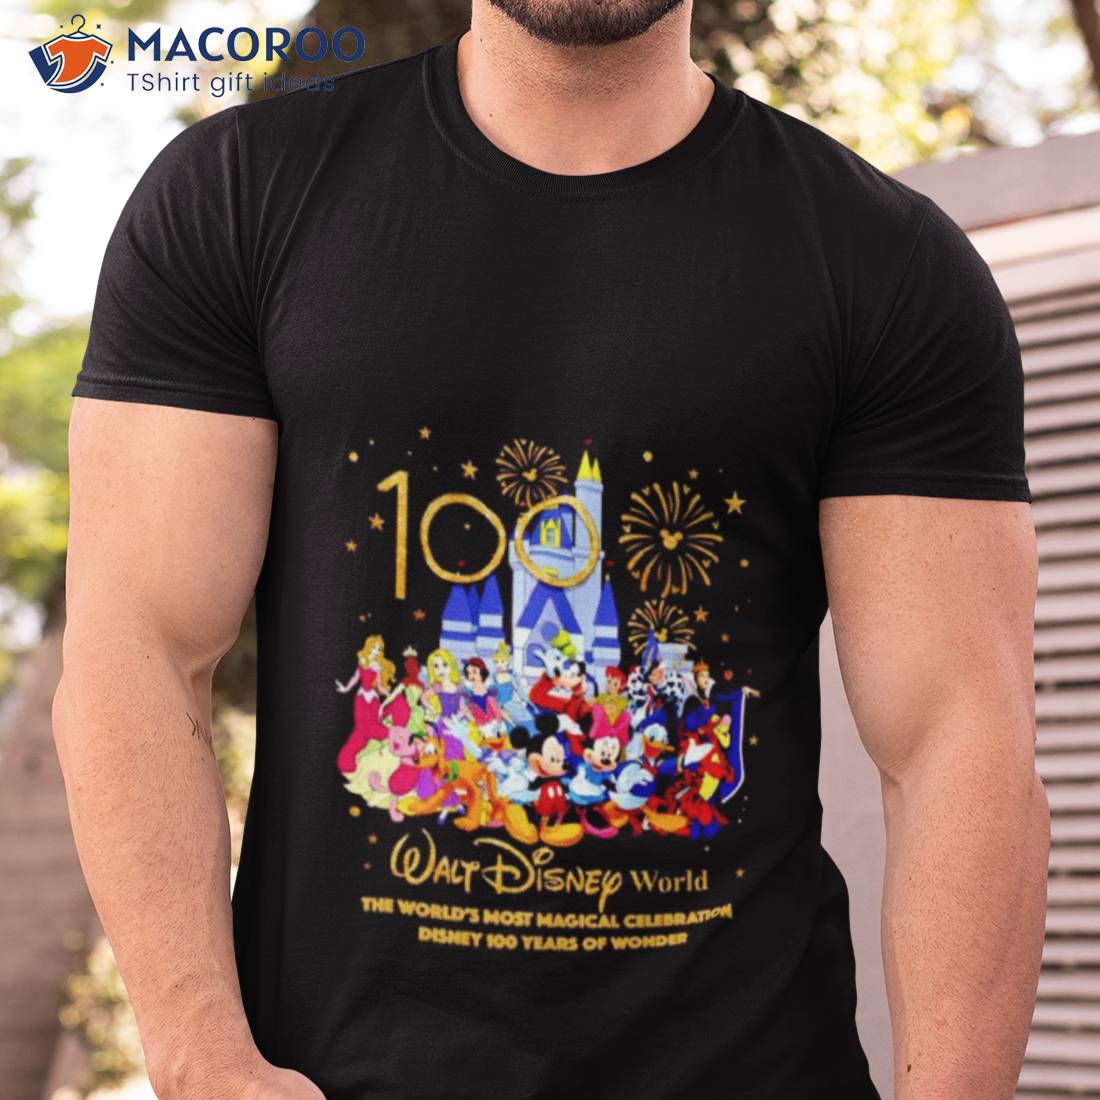 https://images.macoroo.com/wp-content/uploads/2023/06/walt-disney-world-the-worlds-most-magical-celebration-disney-100-years-of-wonder-shirt-tshirt.jpg